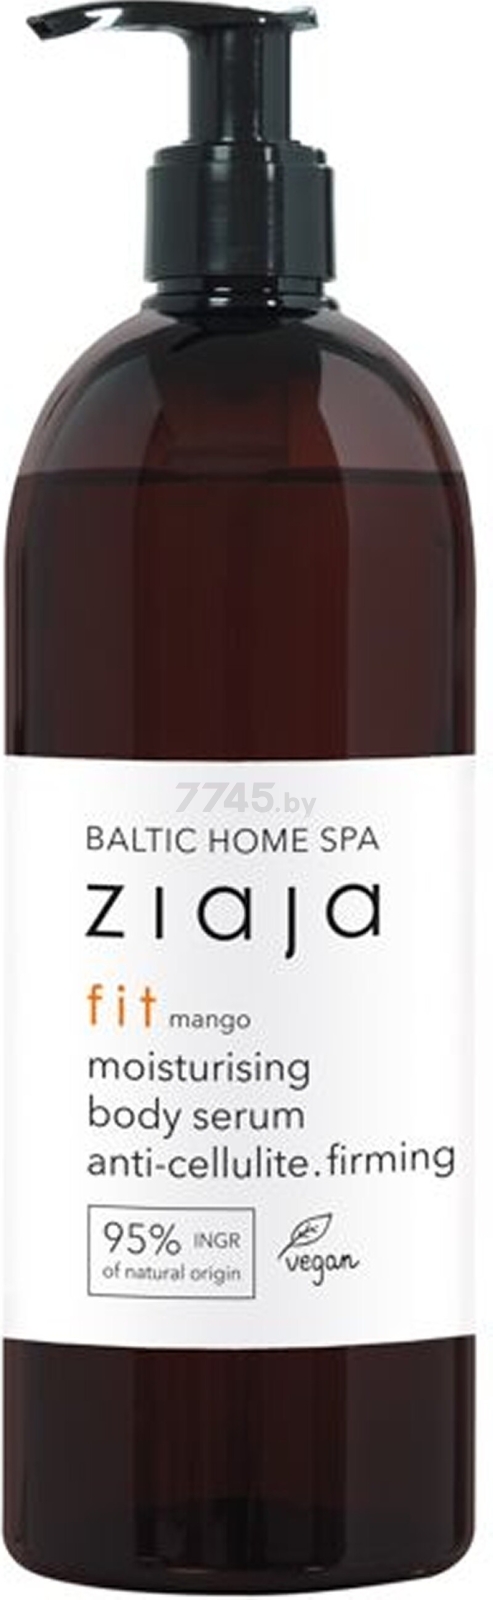 Сыворотка для тела ZIAJA Baltic Home Spa Fit Mango Moisturising Body Serum Увлажняющая 400 мл (16230)